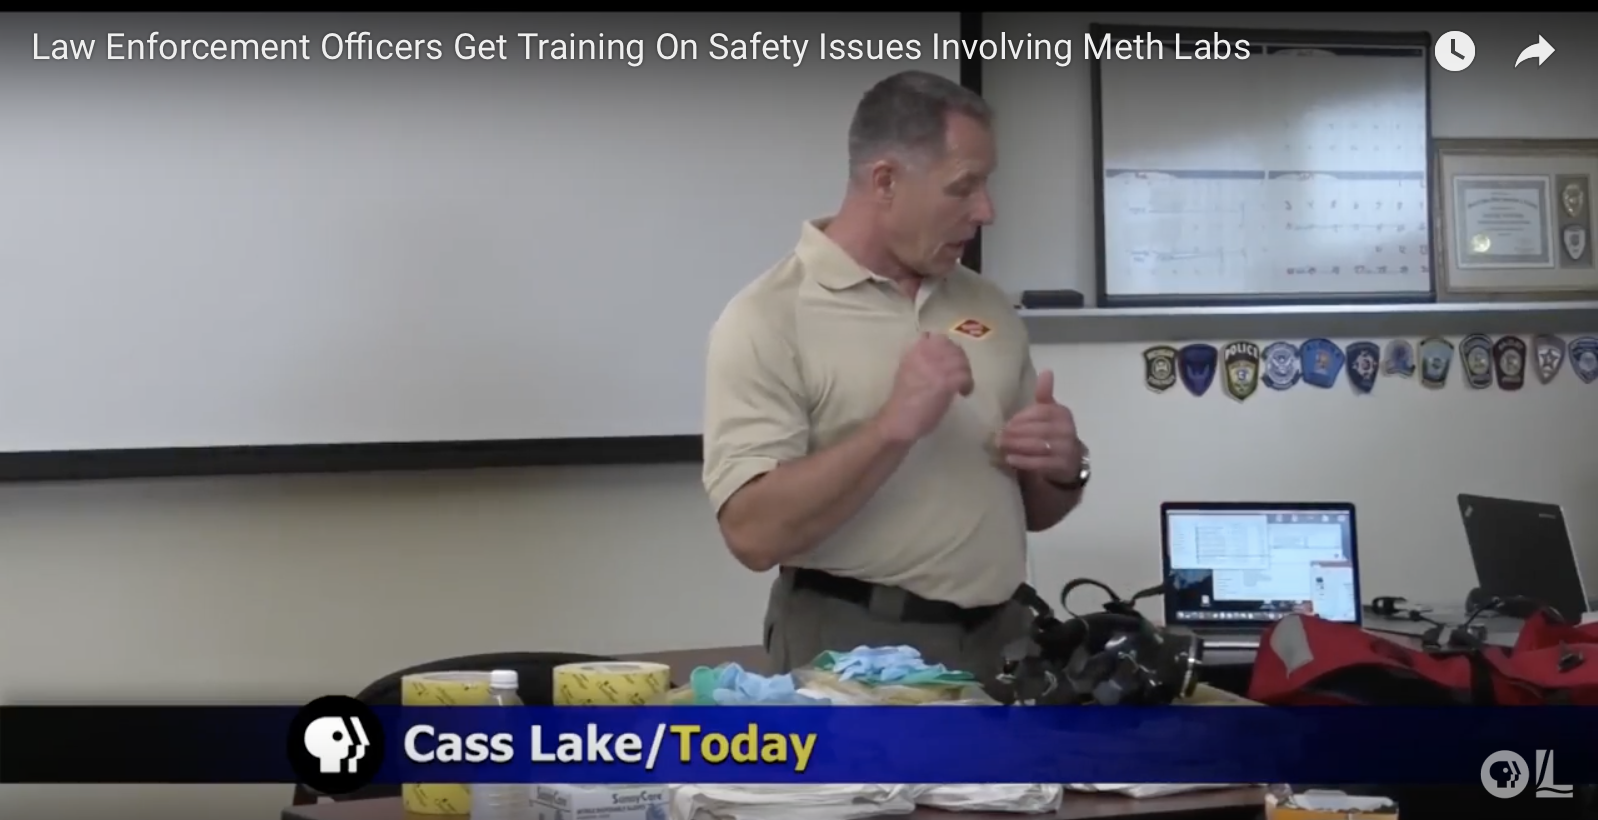 LLTC meth Lab Safety training for law enforcement officers